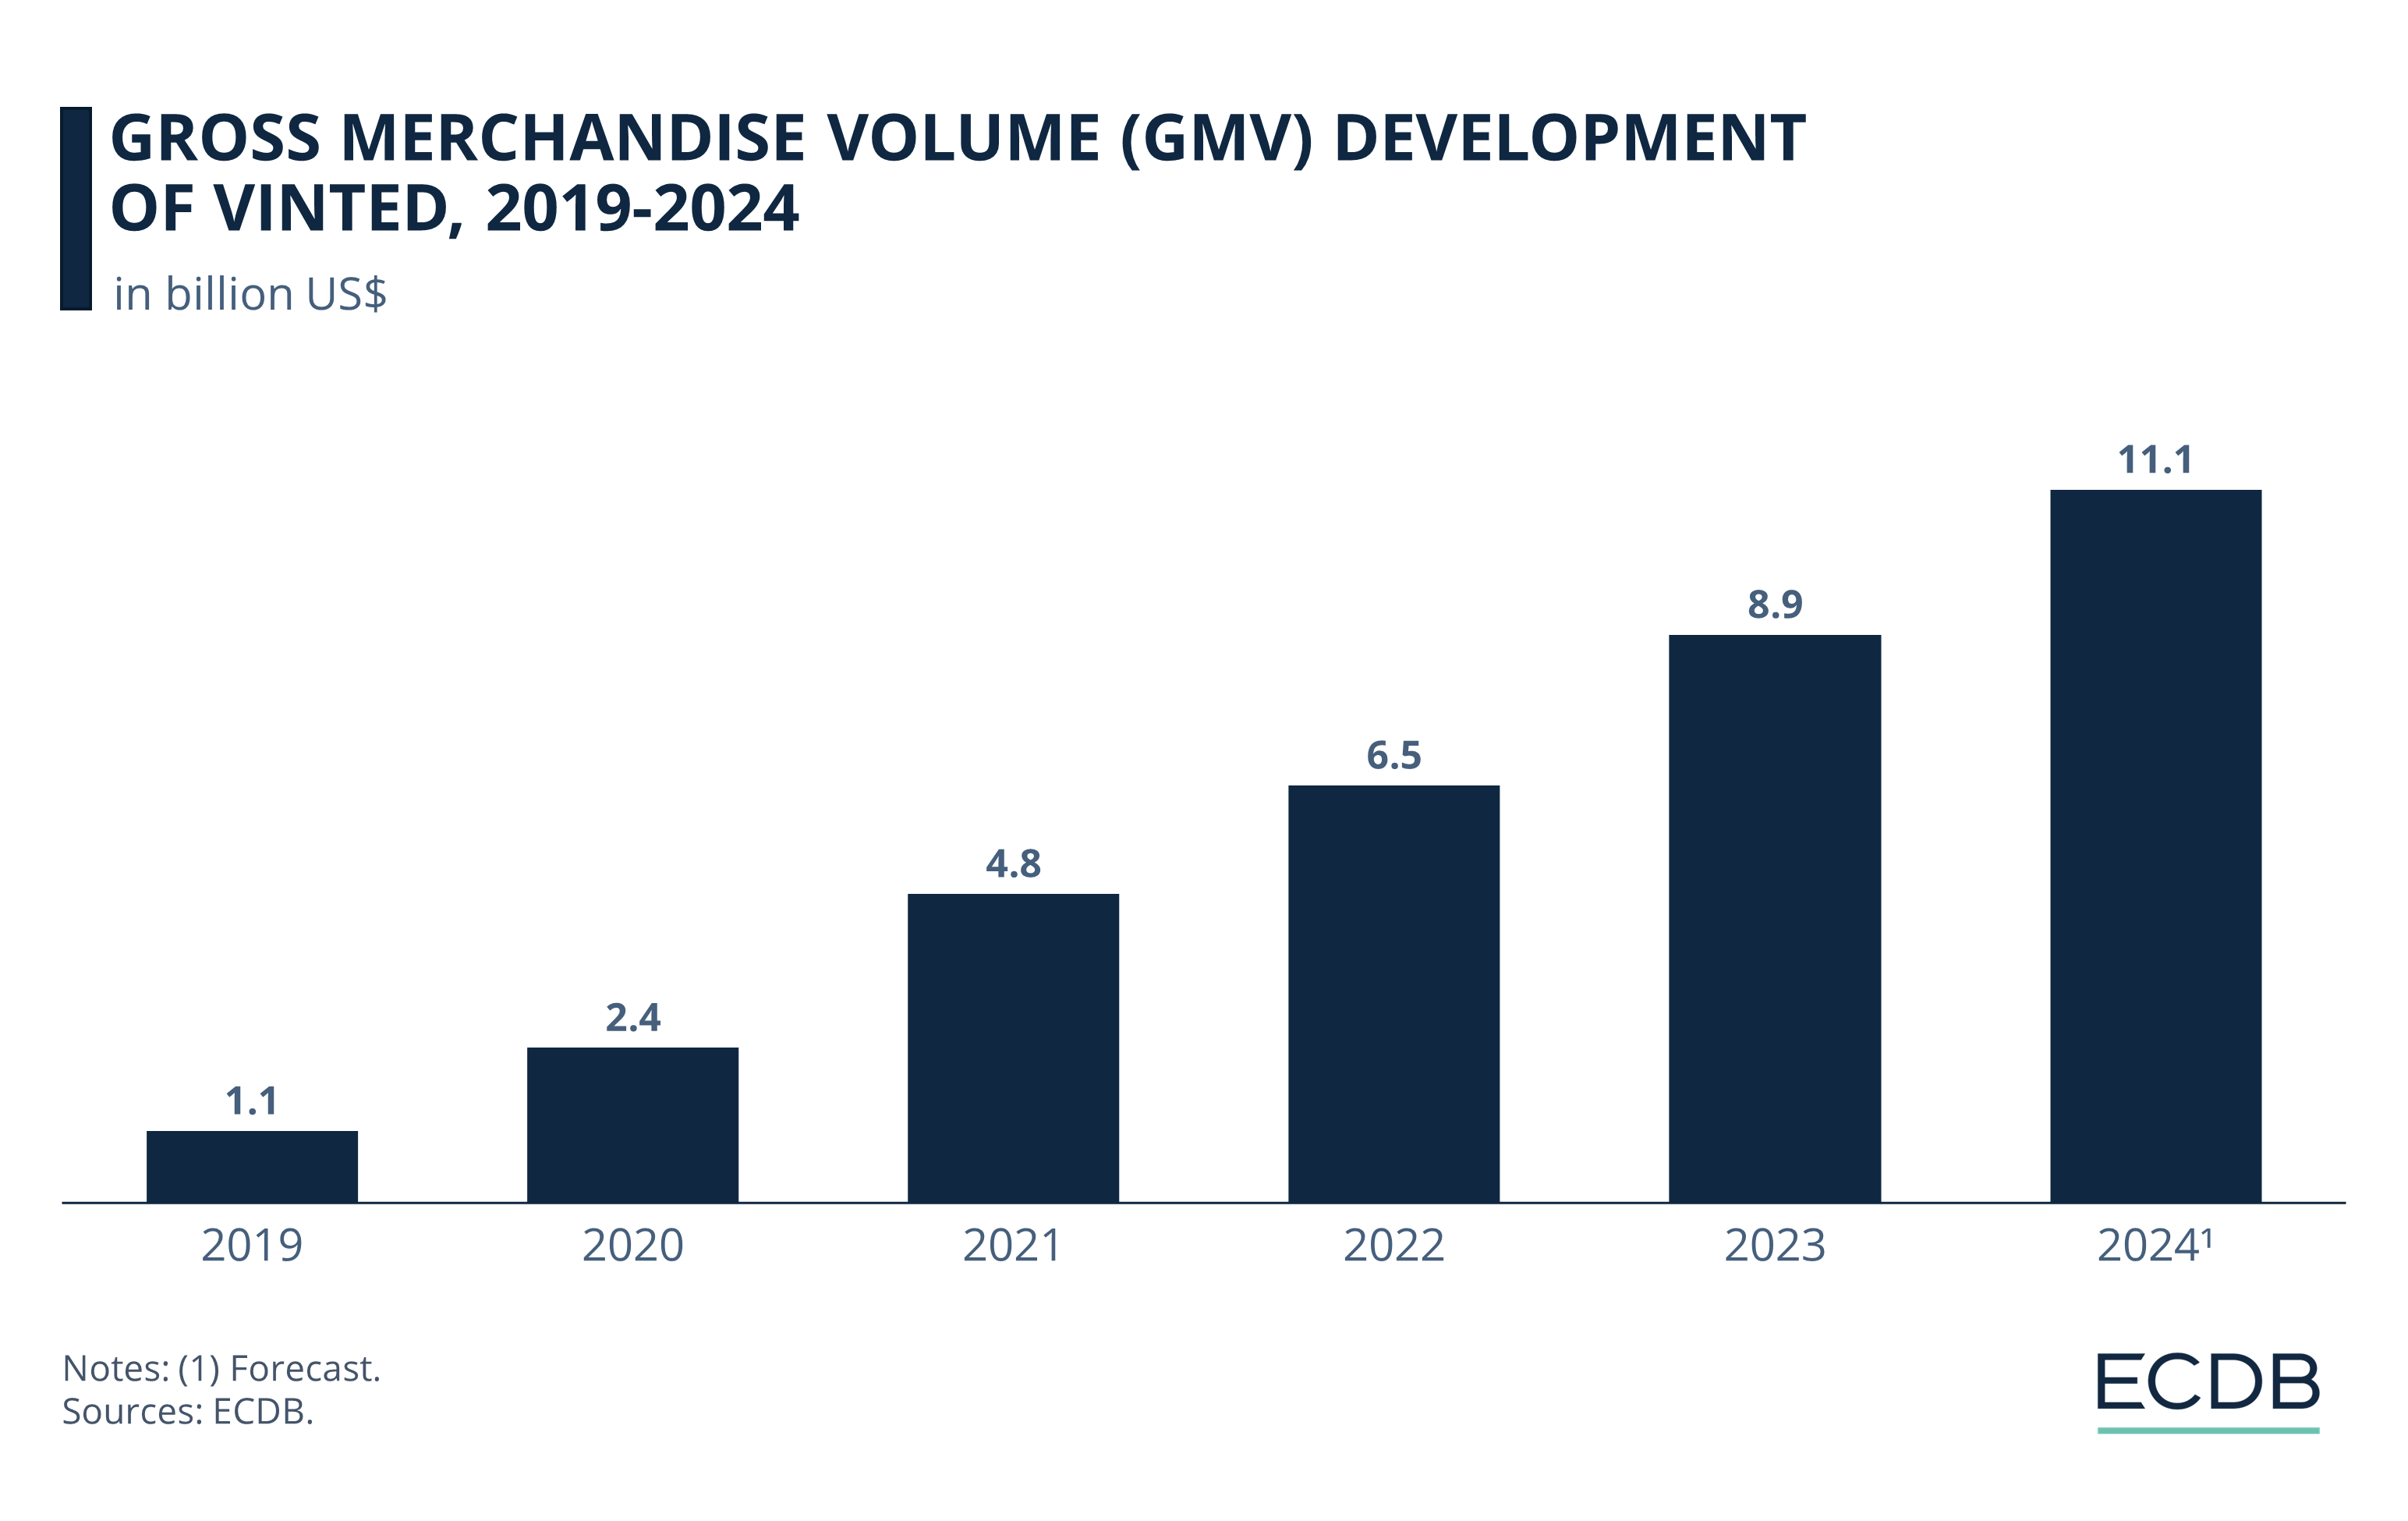 GMV Development of Vinted, 2019-2024